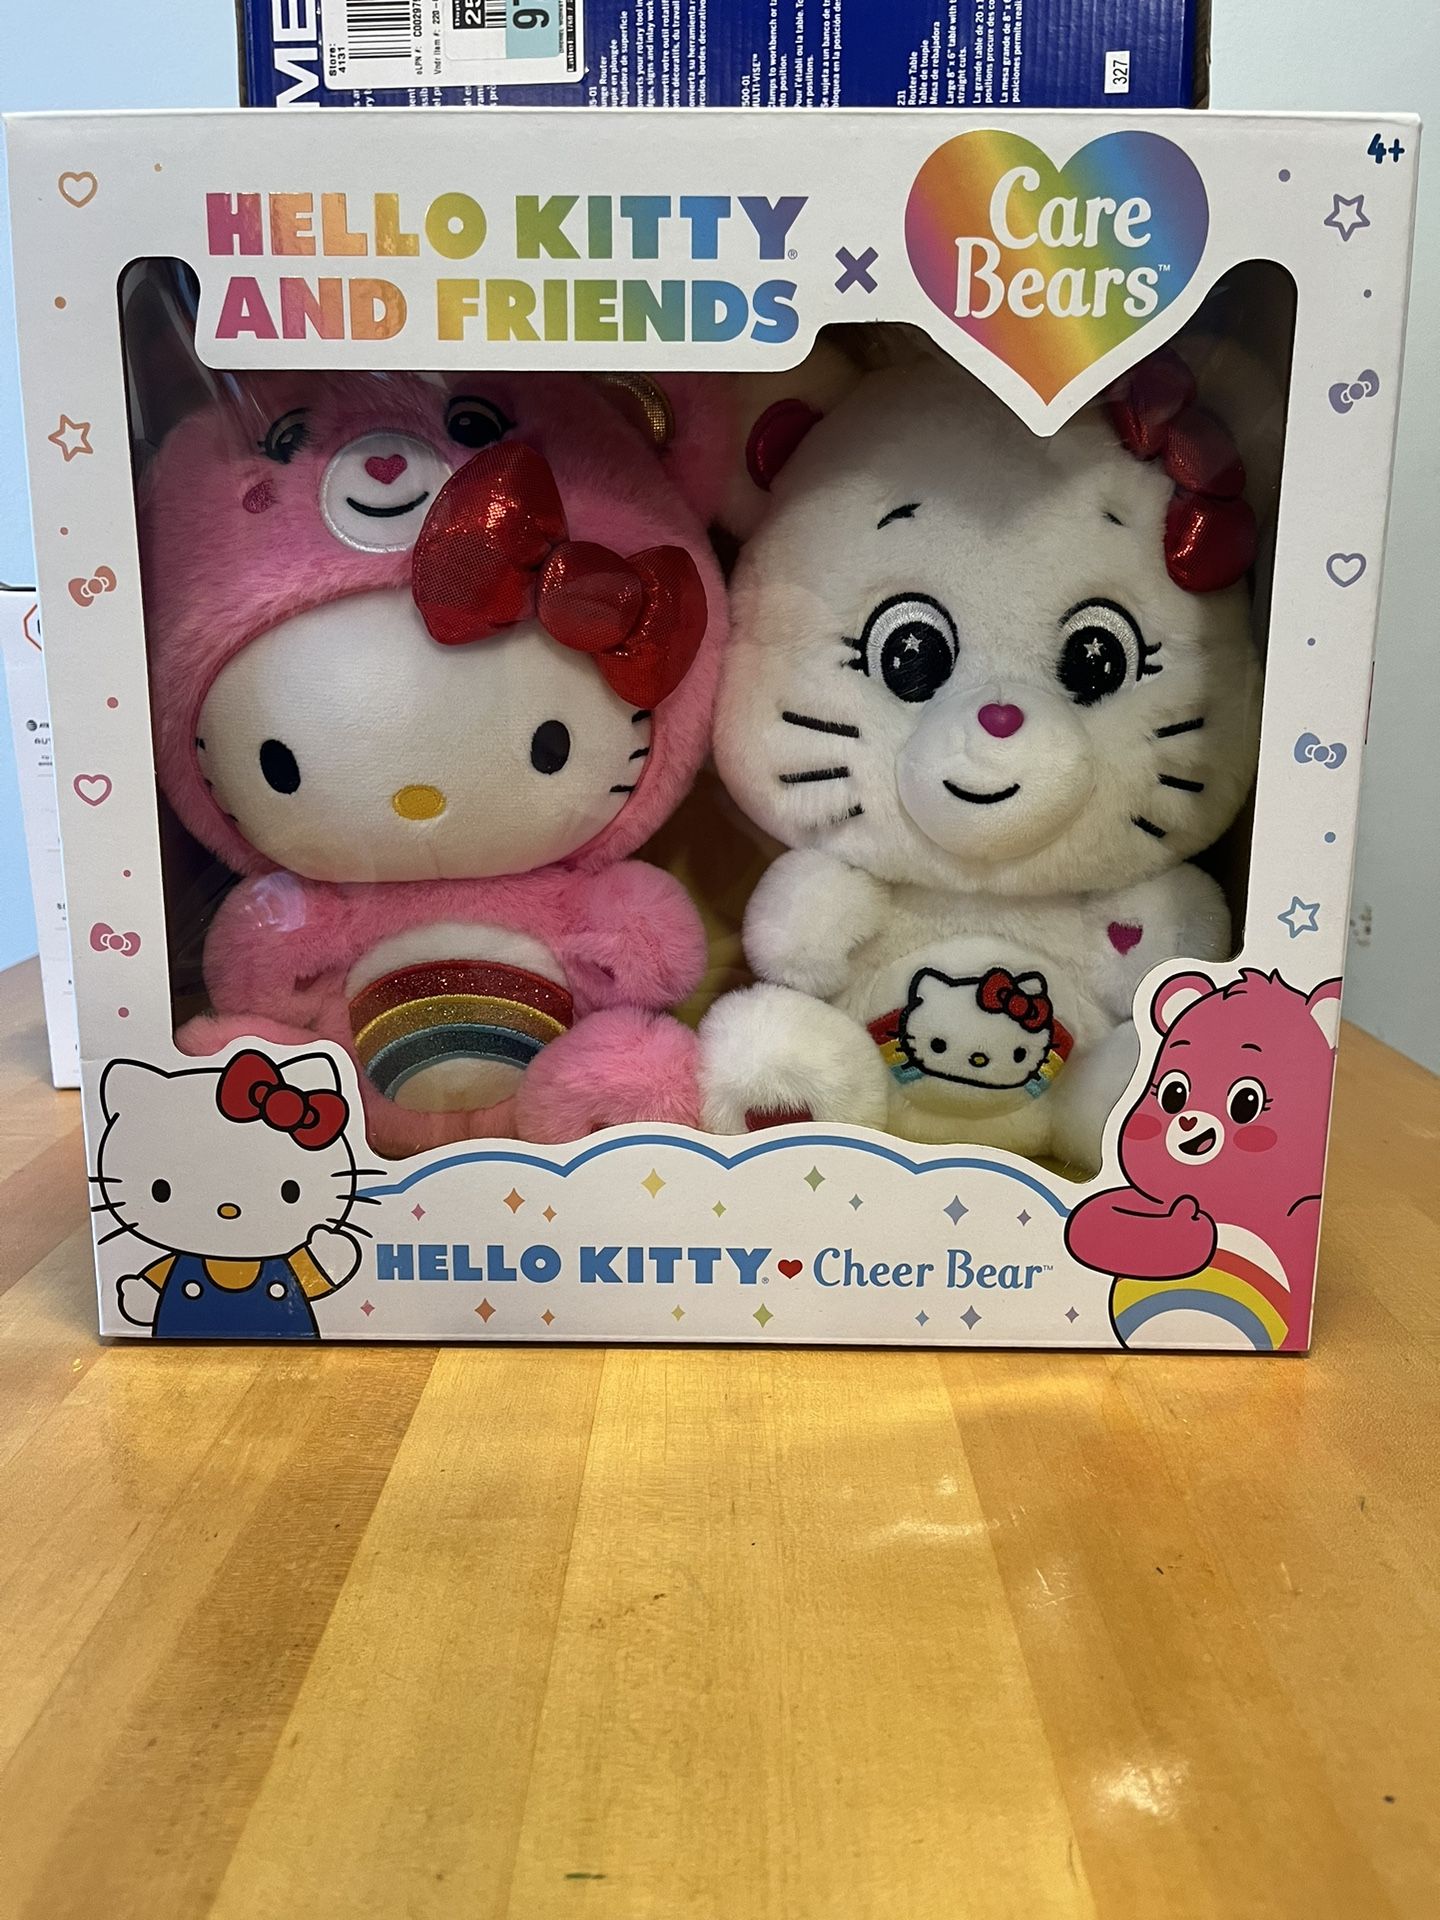 Hello Kitty and Friends x Care bears Hello kitty Cheer Bear